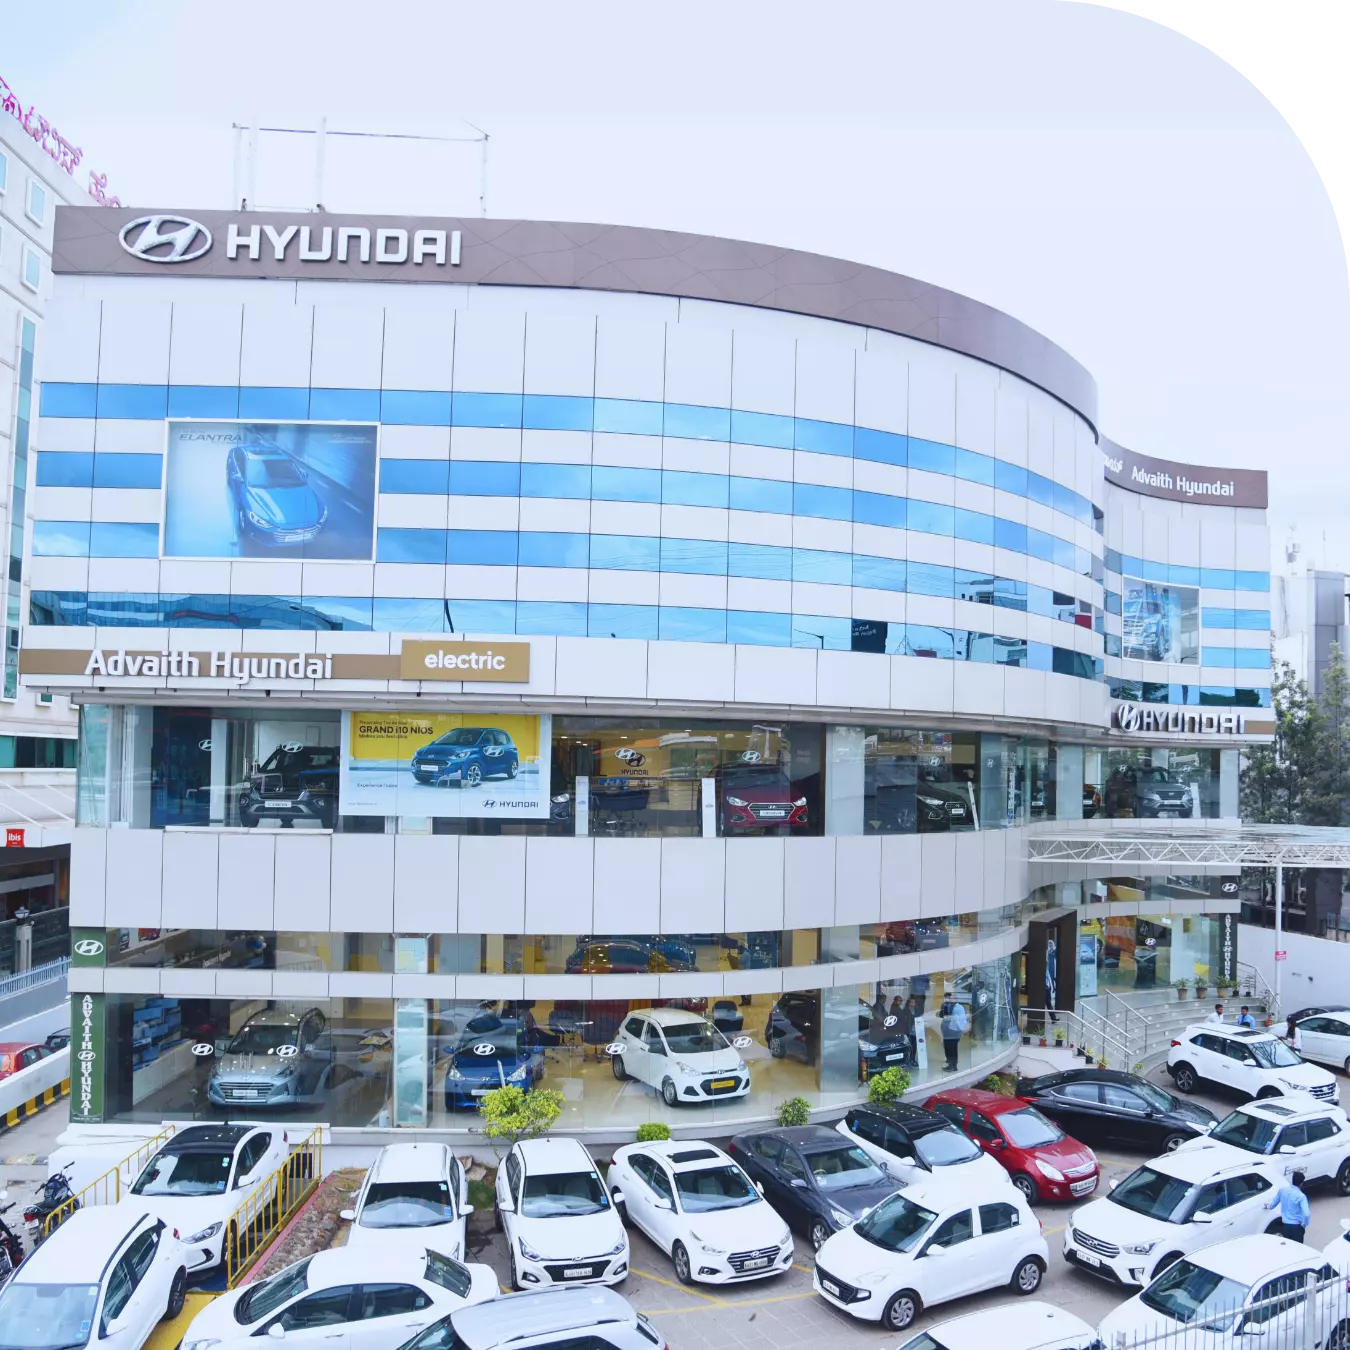 Advaith Hyundai | Hyundai Showroom in Bangalore